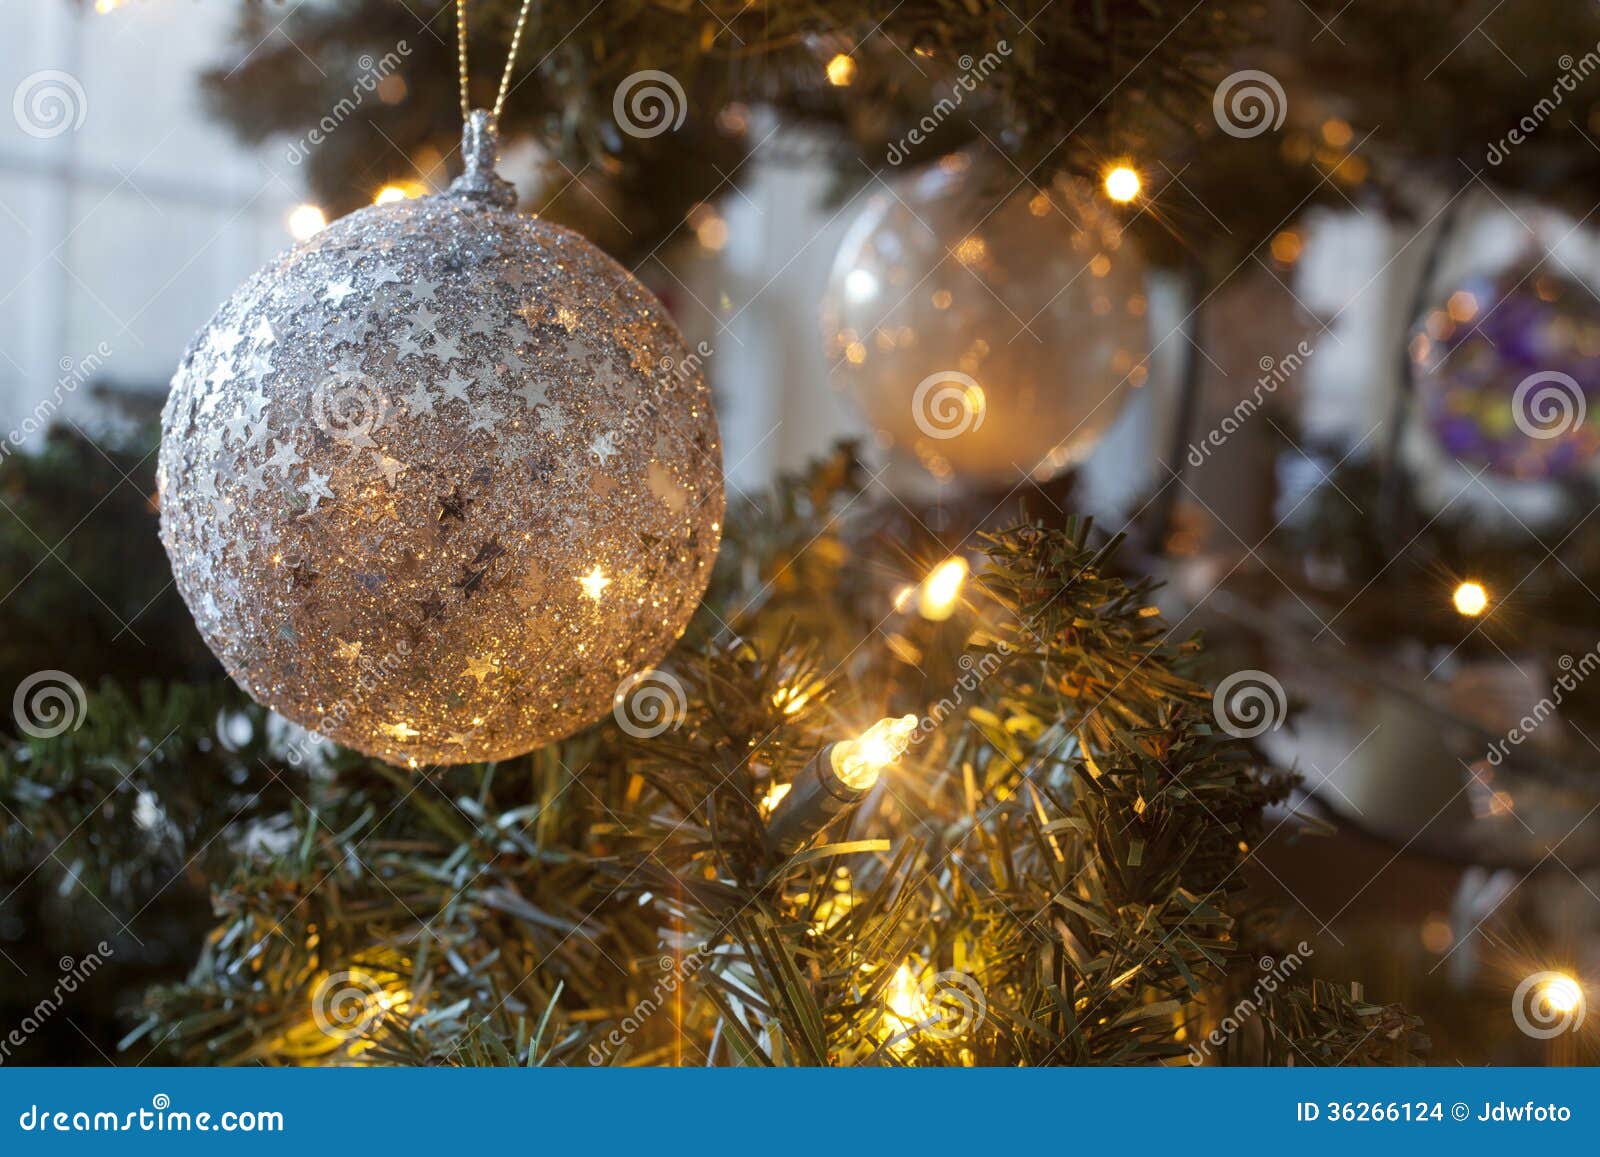 Ornamento do Natal. Decorative ornaments hanging on a Christmas tree.